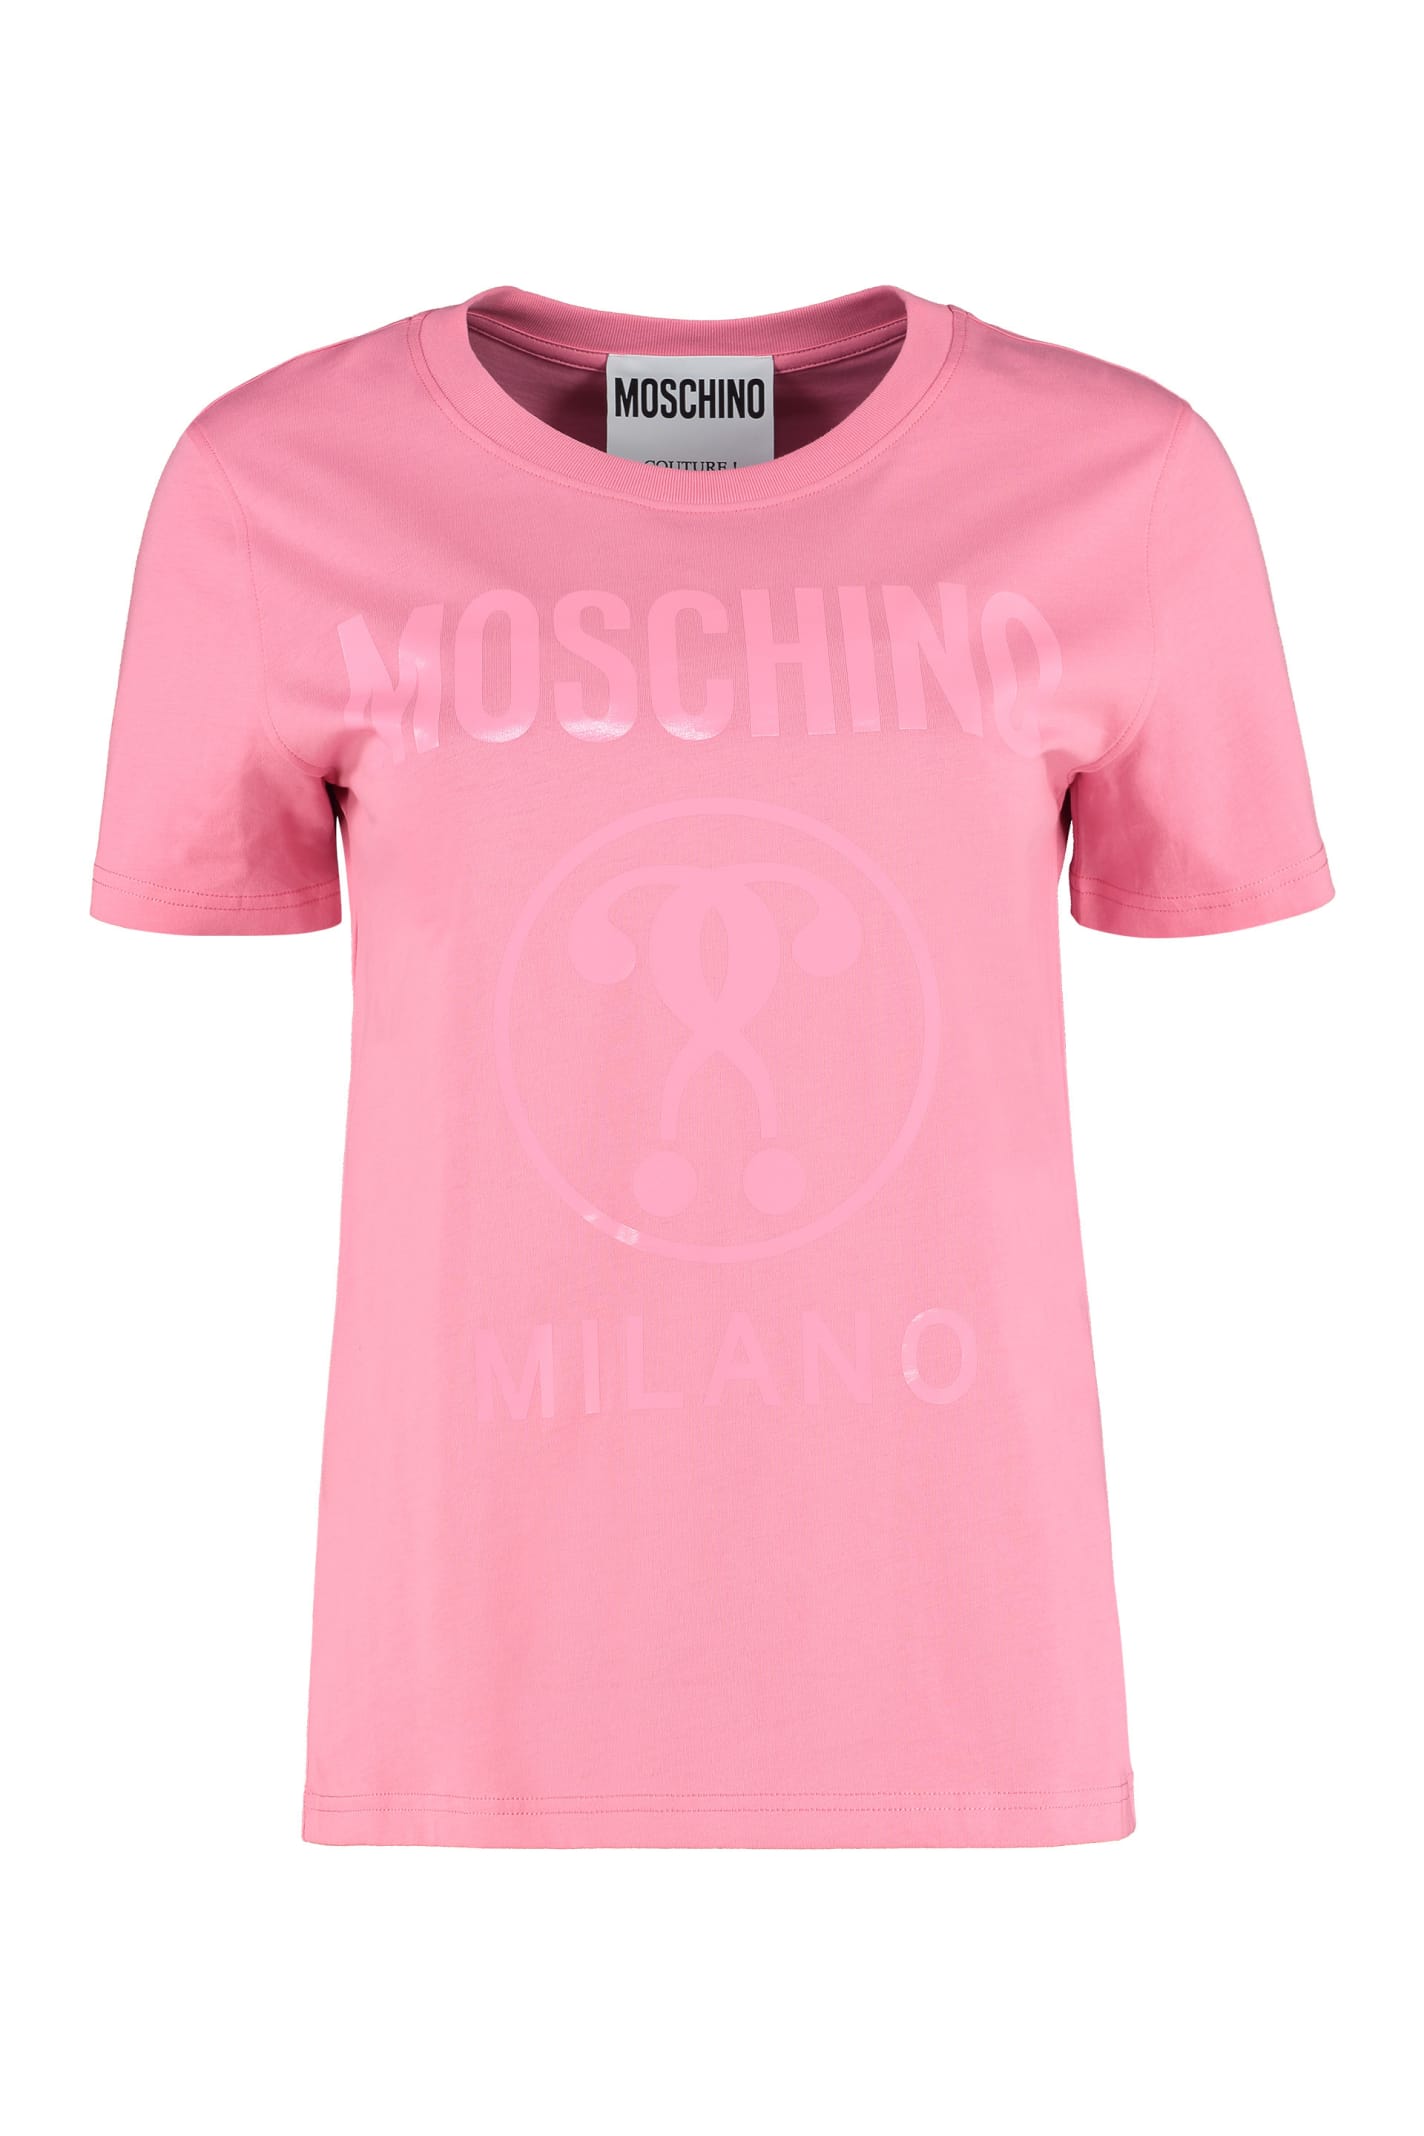 Moschino Cotton Crew-neck T-shirt